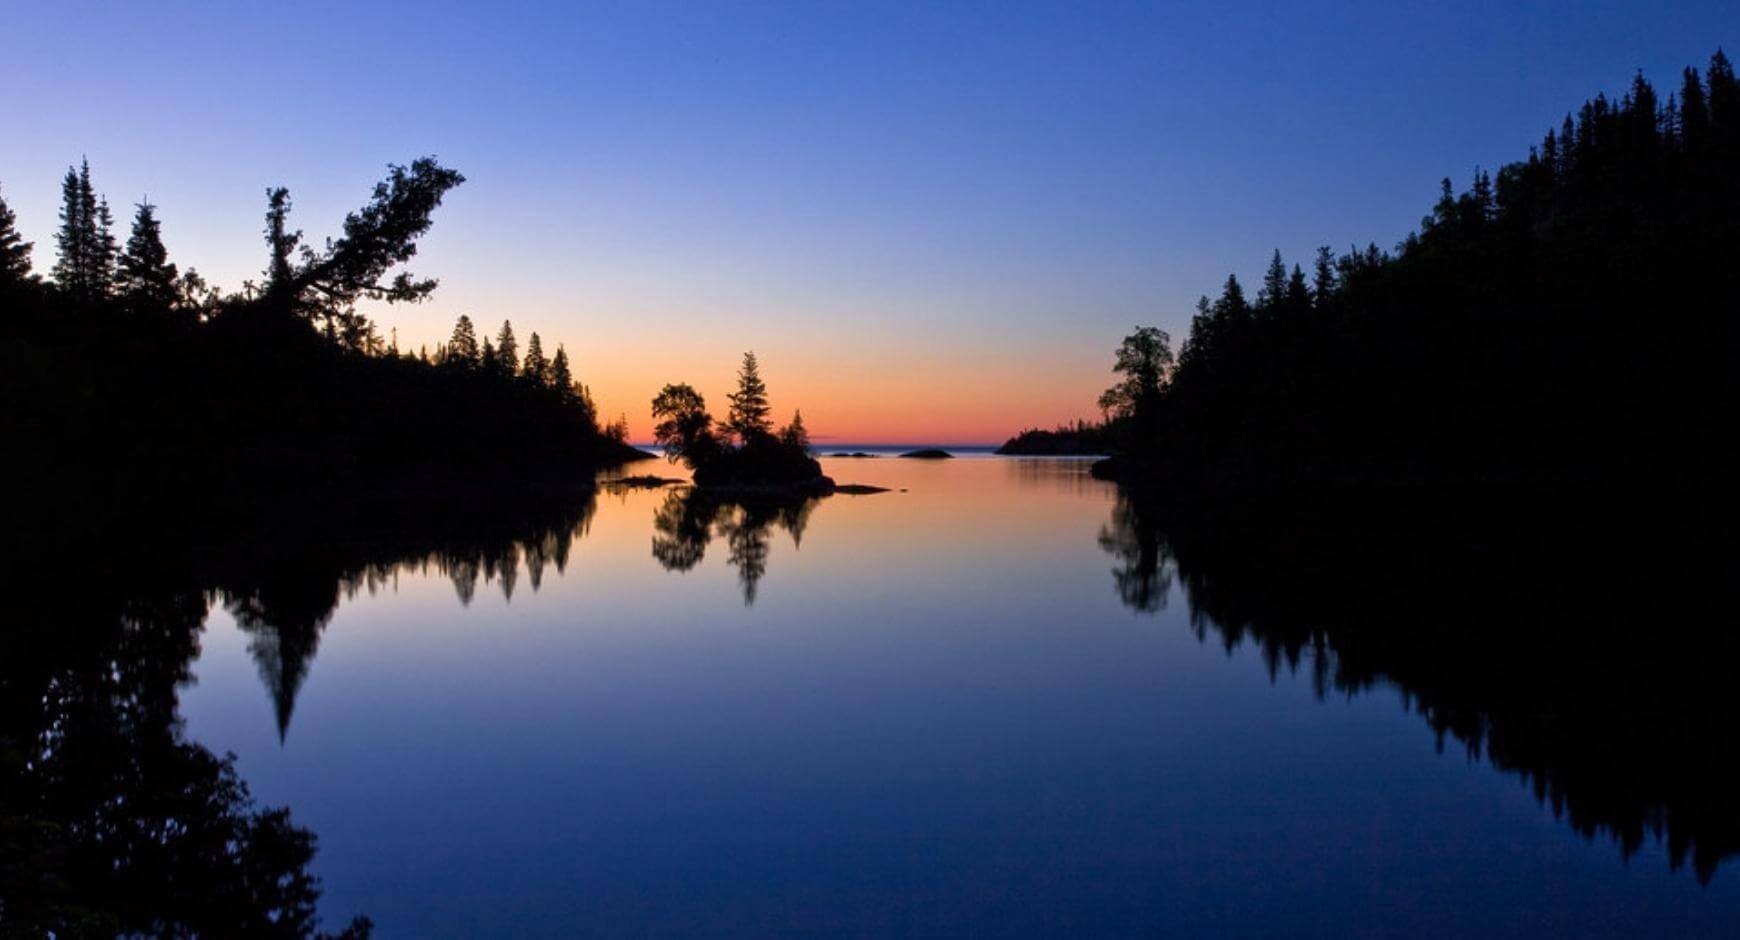 Lake reflection at sunset